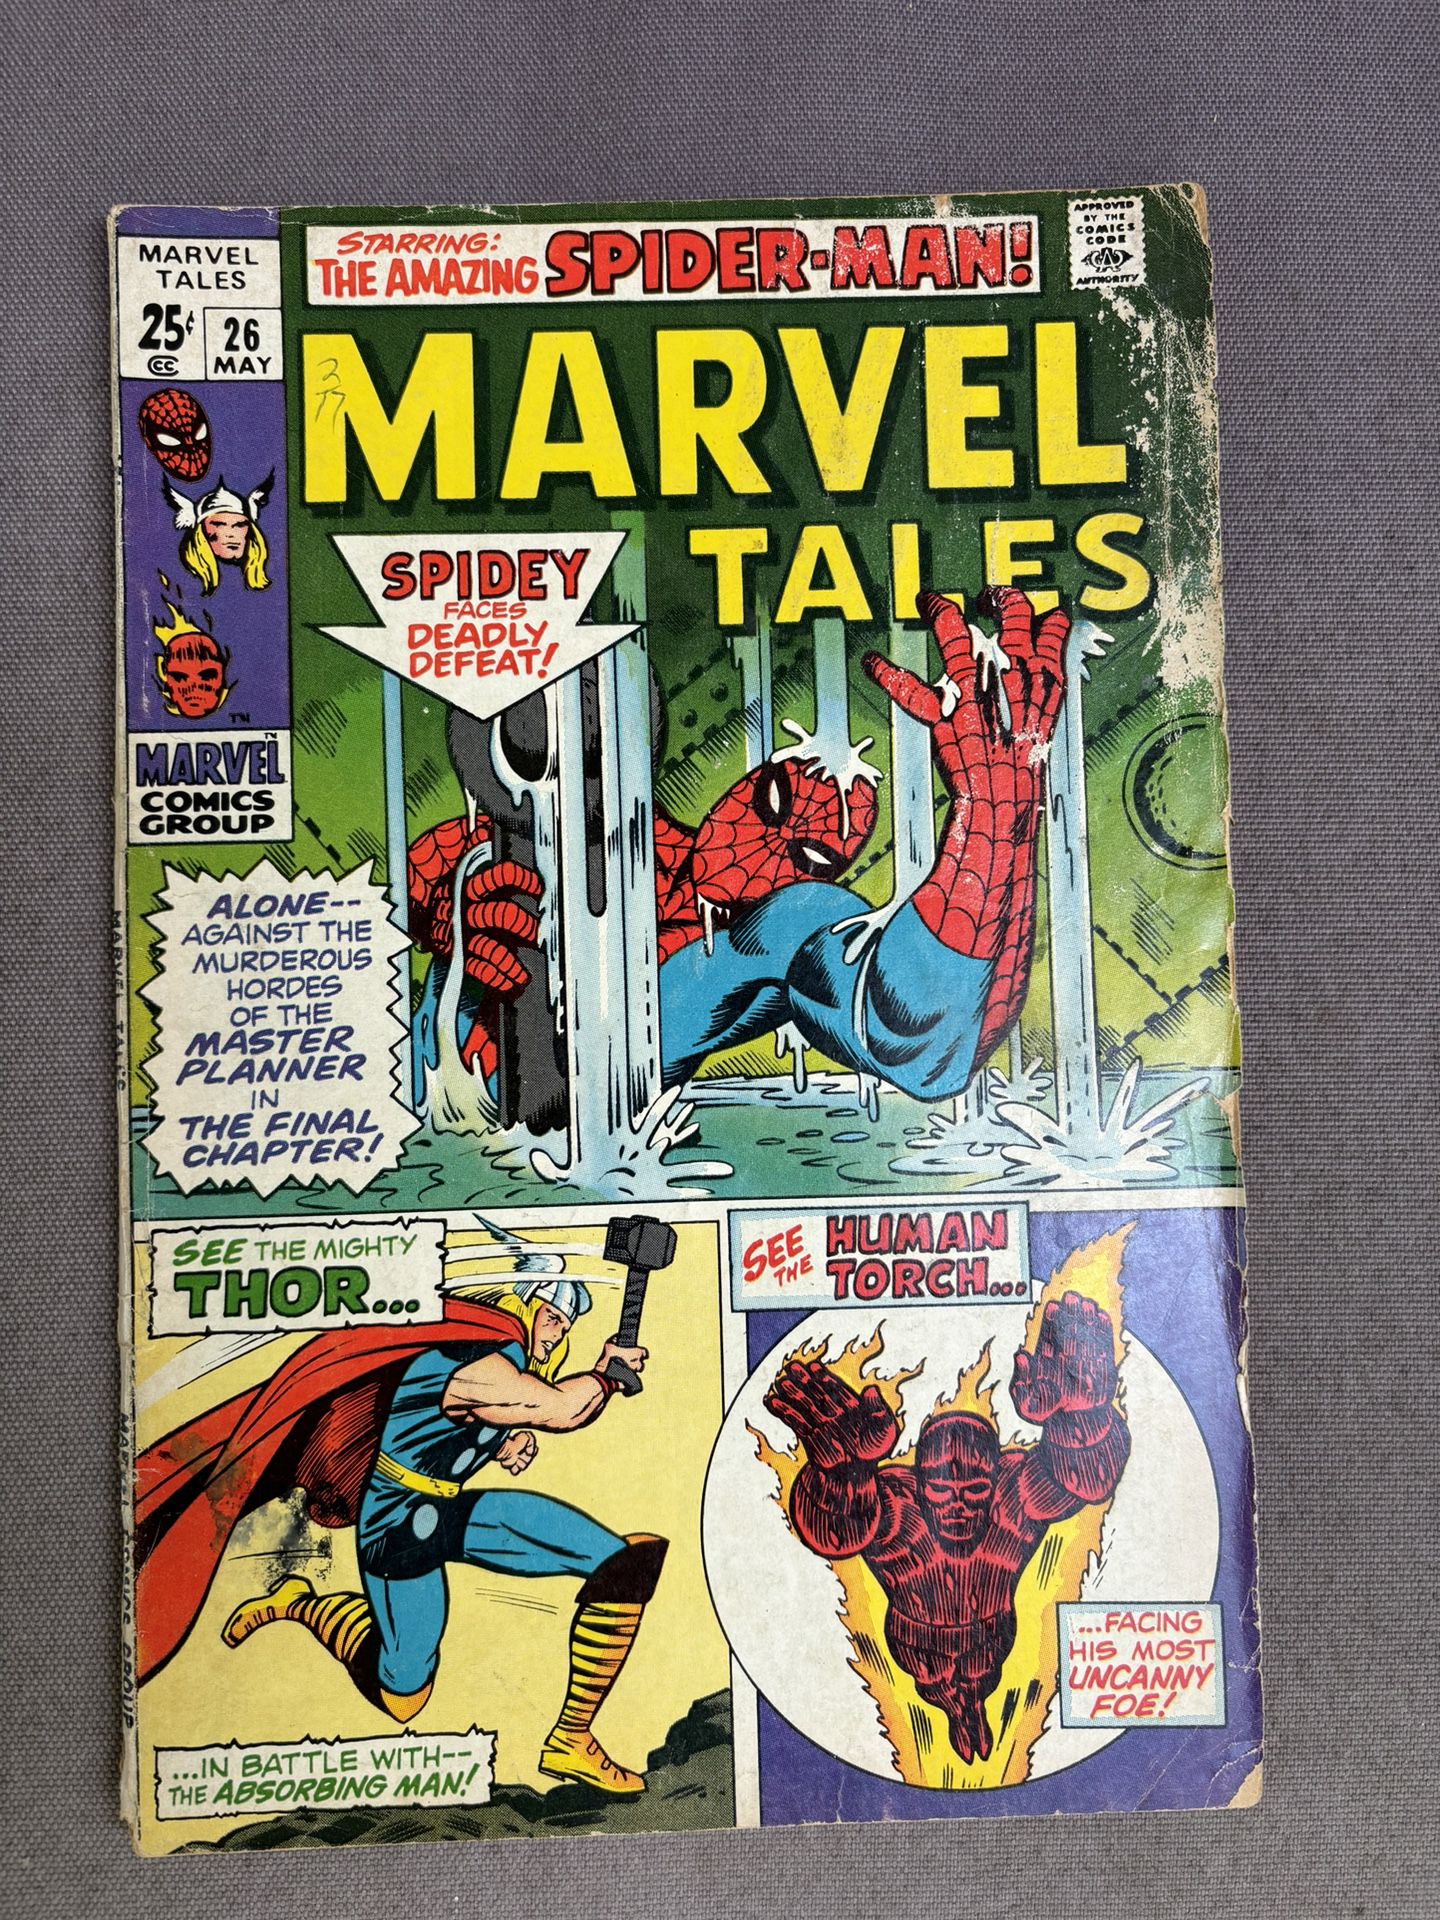 Marvel’s Tale Comic Book #26